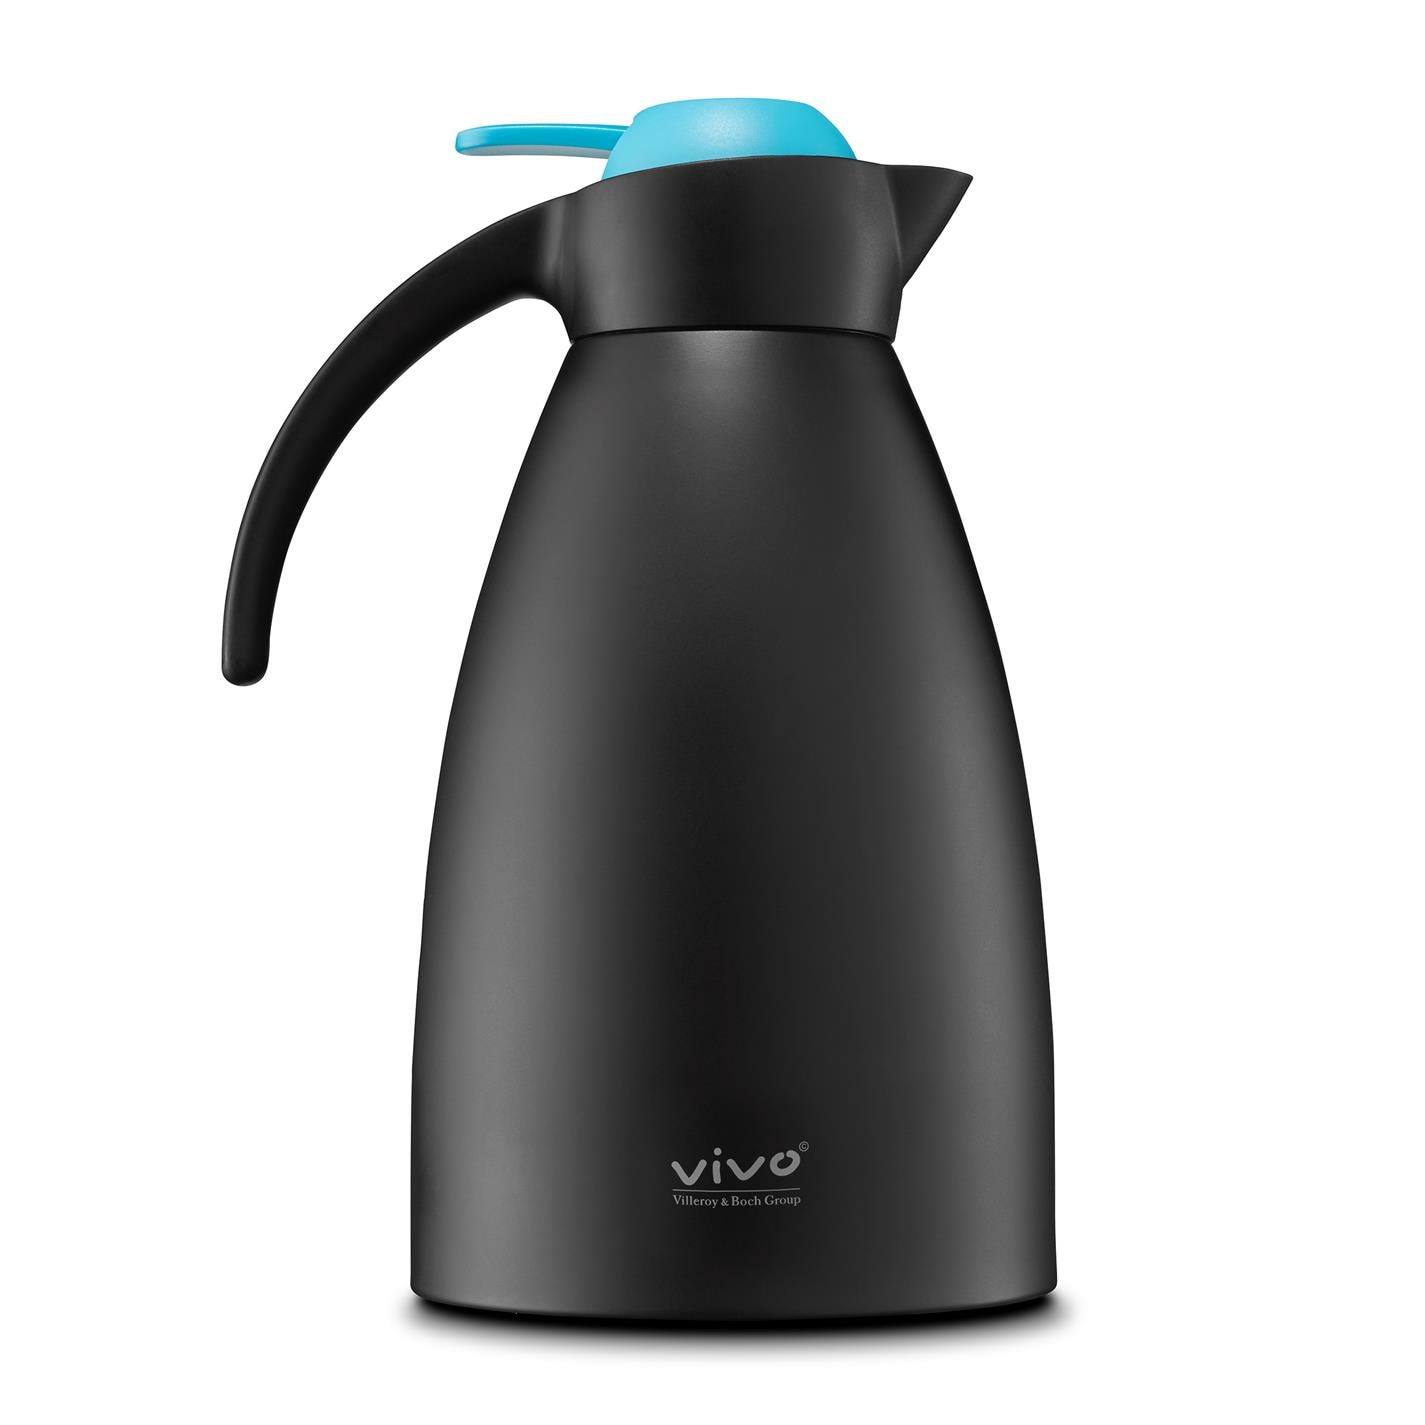 Villeroy and Boch VIVO Coffee Pot negru